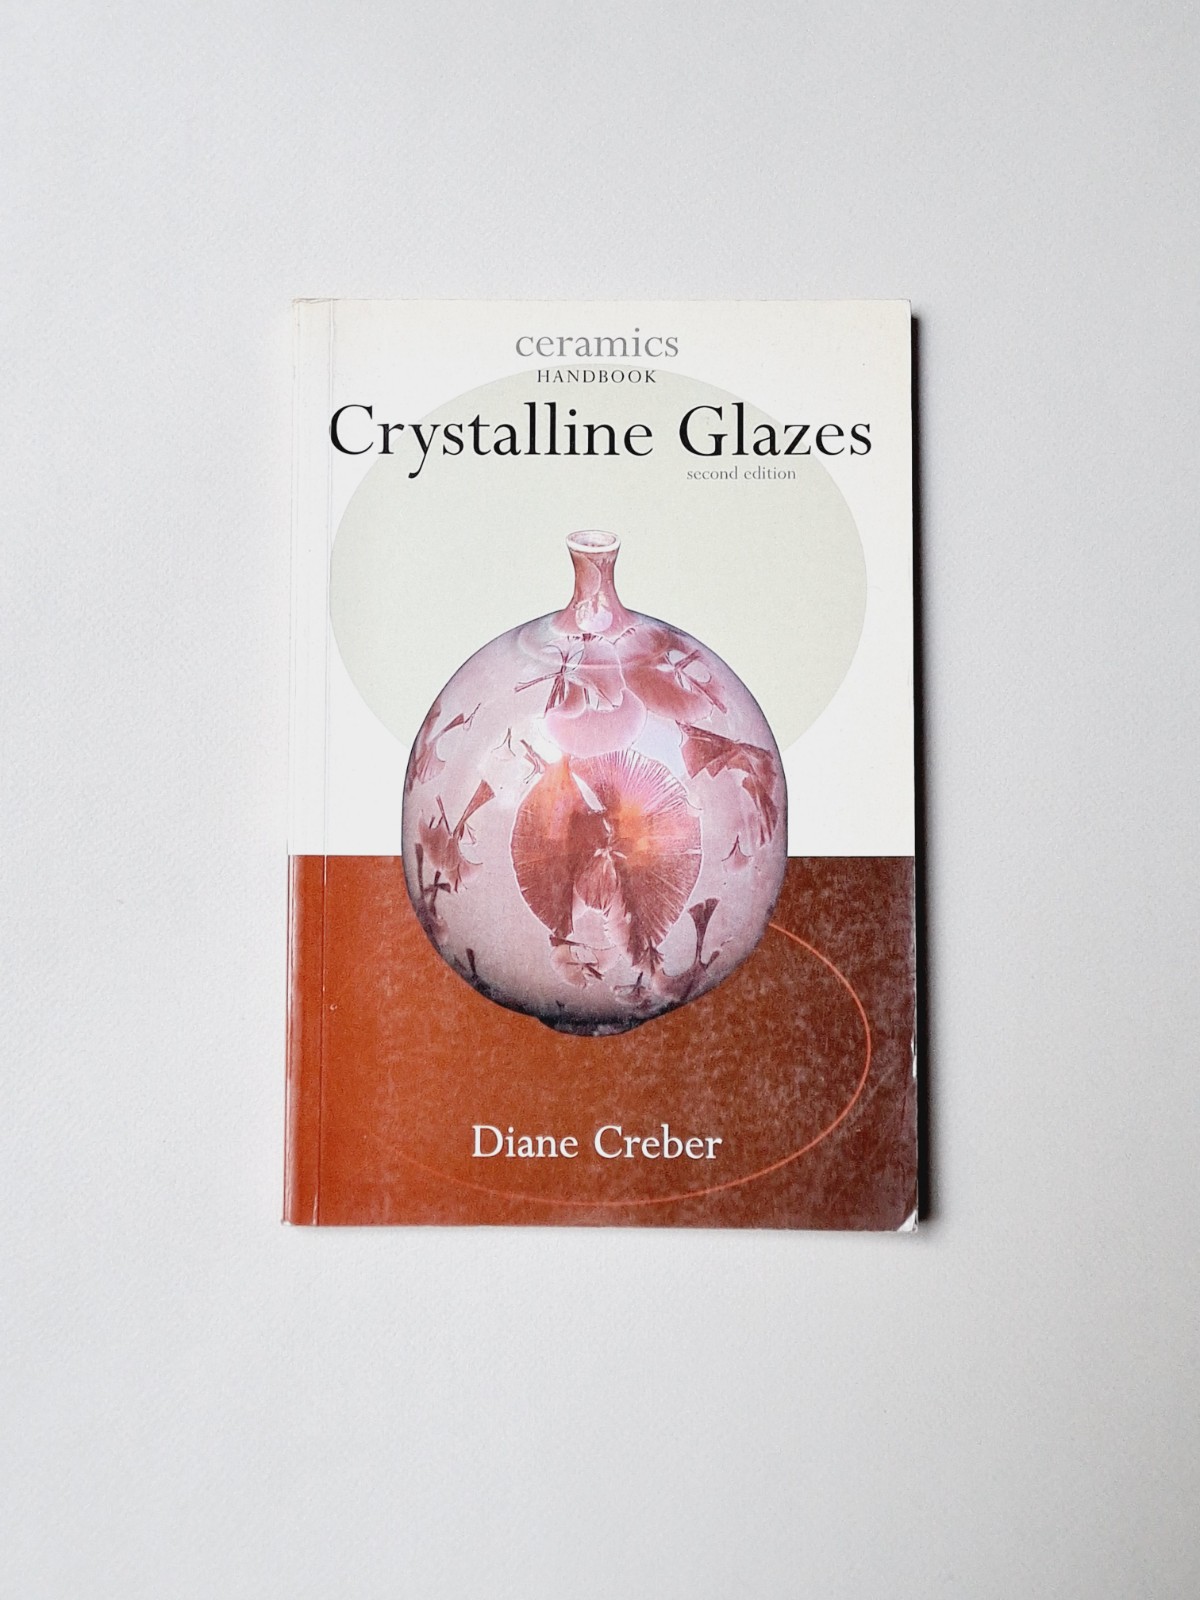 Crystalline Glazes by Diane Creber